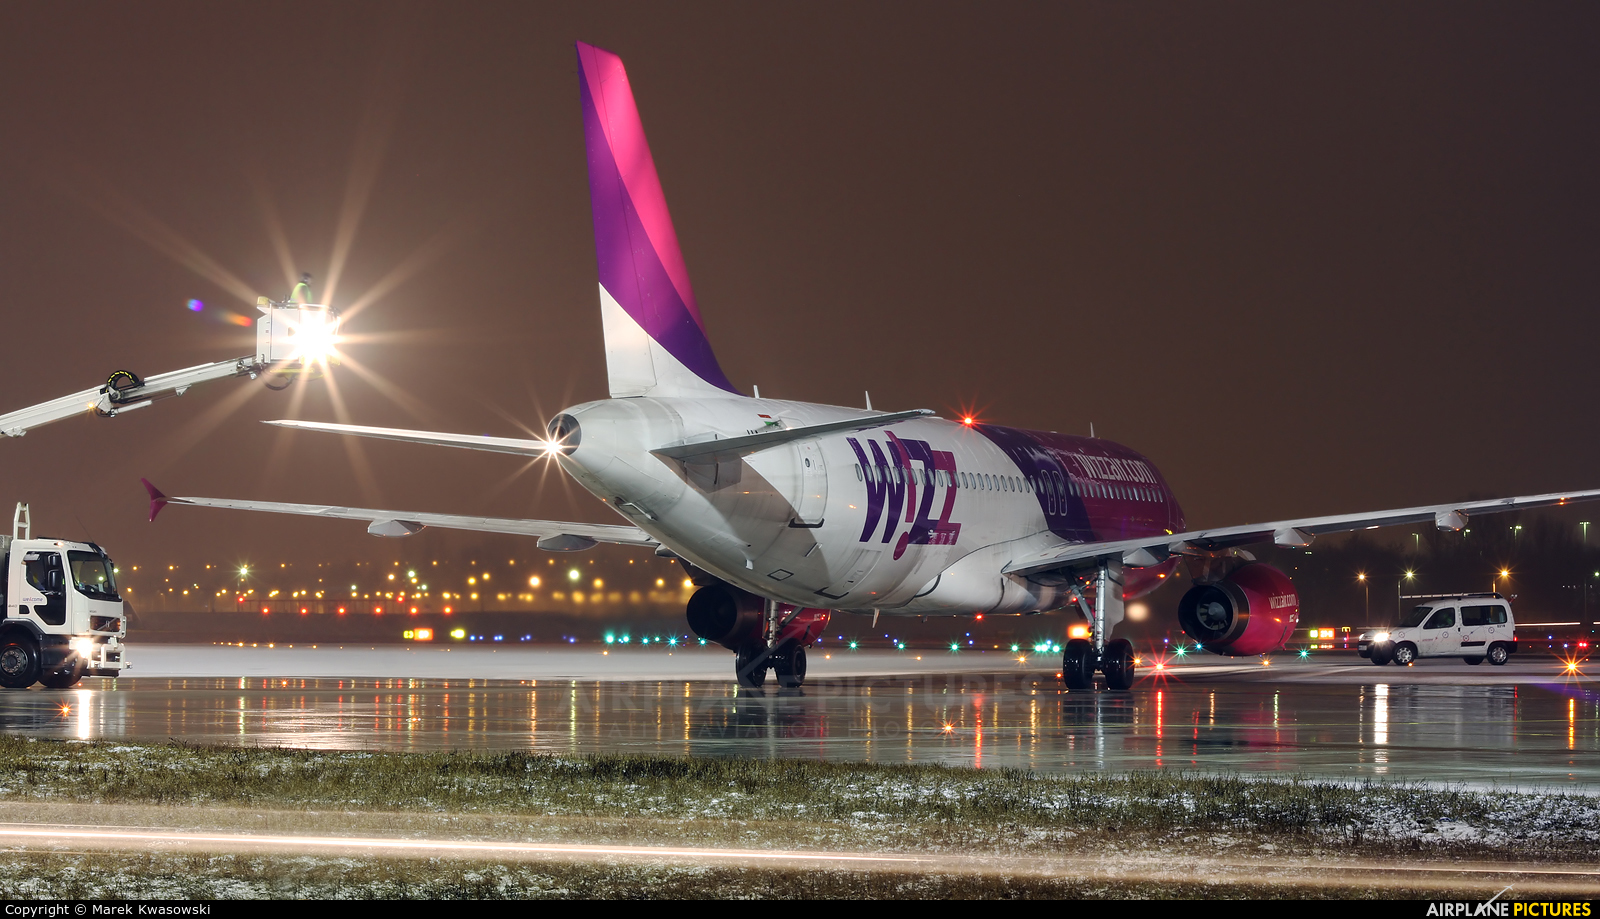 Wizz Air HA-LWA aircraft at Warsaw - Frederic Chopin